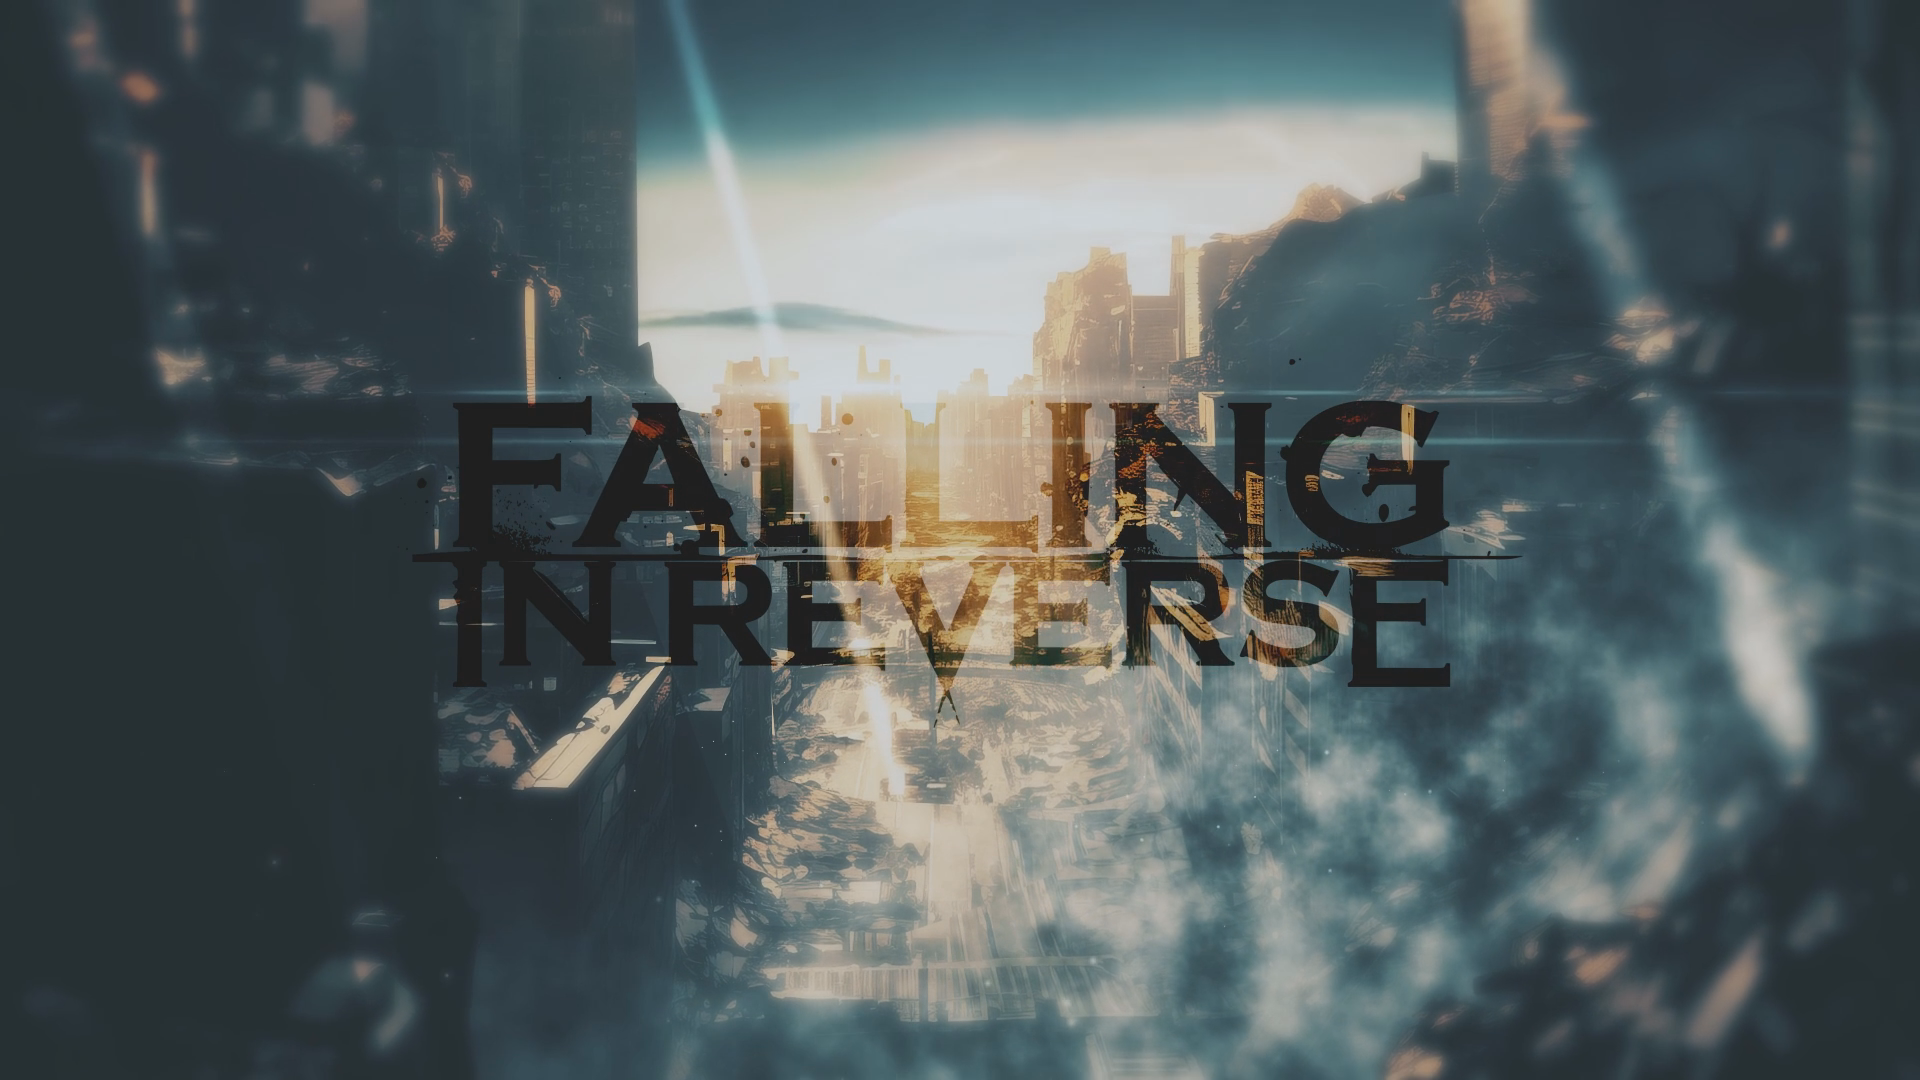 Falling In Reverse - Last resort (русская адаптация Sintara)